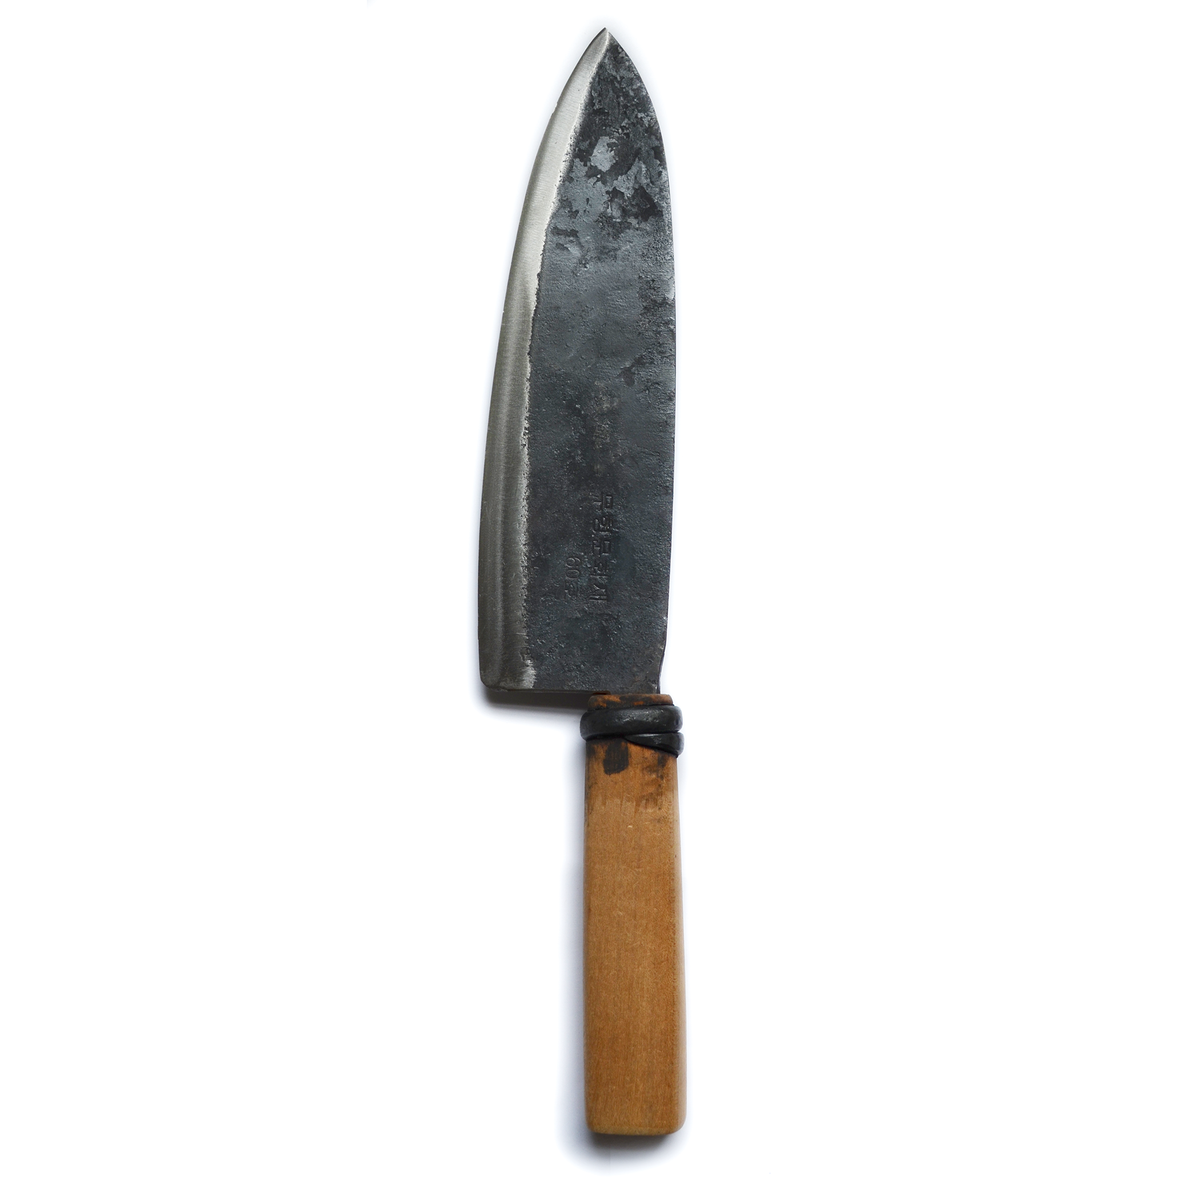 #62 Rustic Kitchen Knife, medium, product photo on white square background